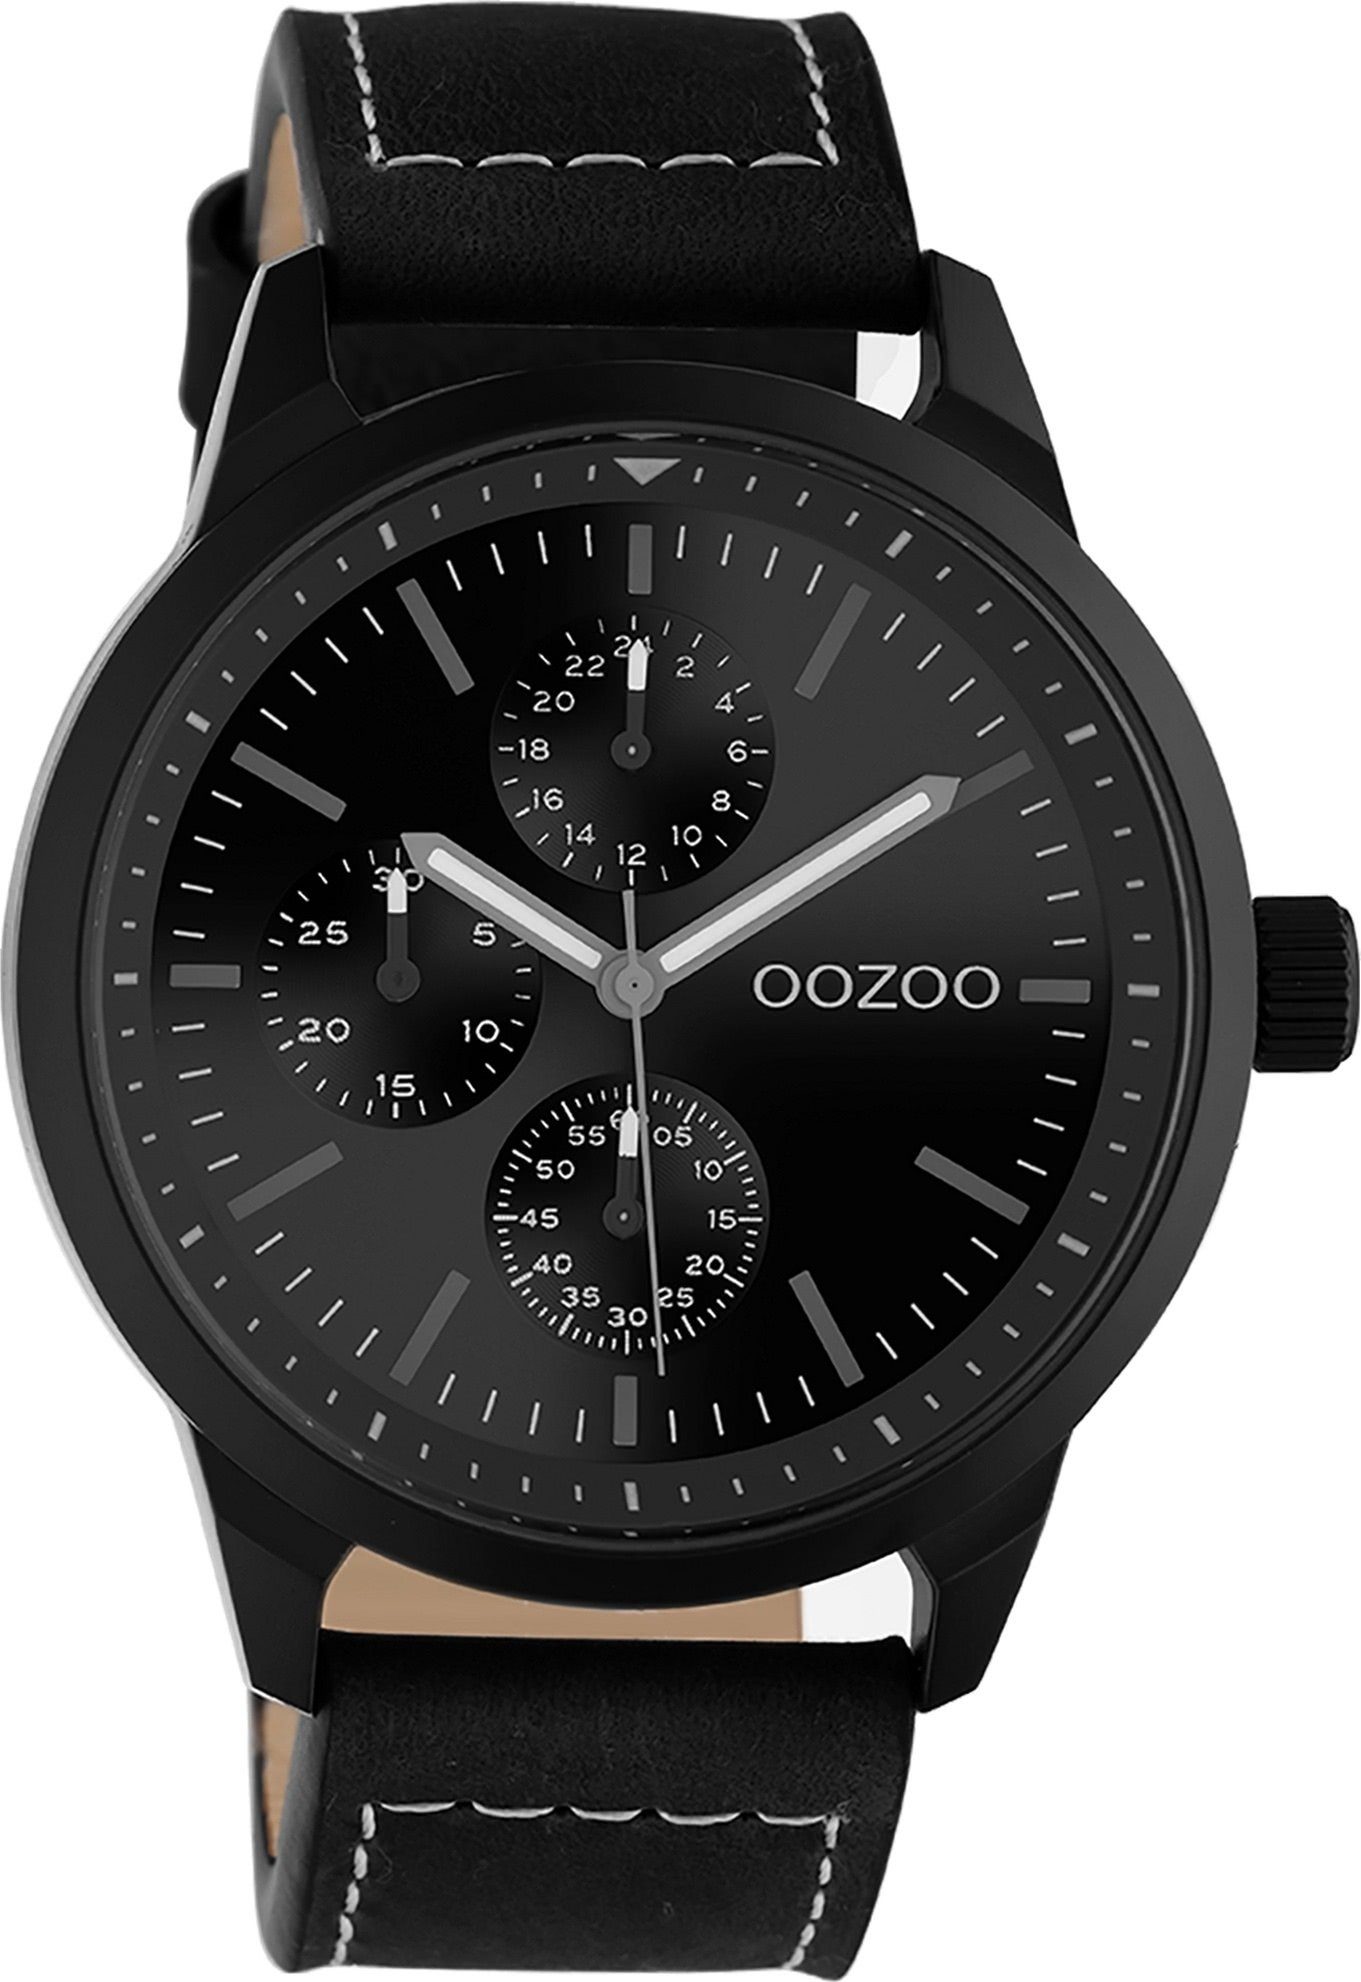 OOZOO Quarzuhr Oozoo Unisex Armbanduhr schwarz Analog, Damen, Herrenuhr rund, groß (ca. 45mm) Lederarmband, Casual-Style